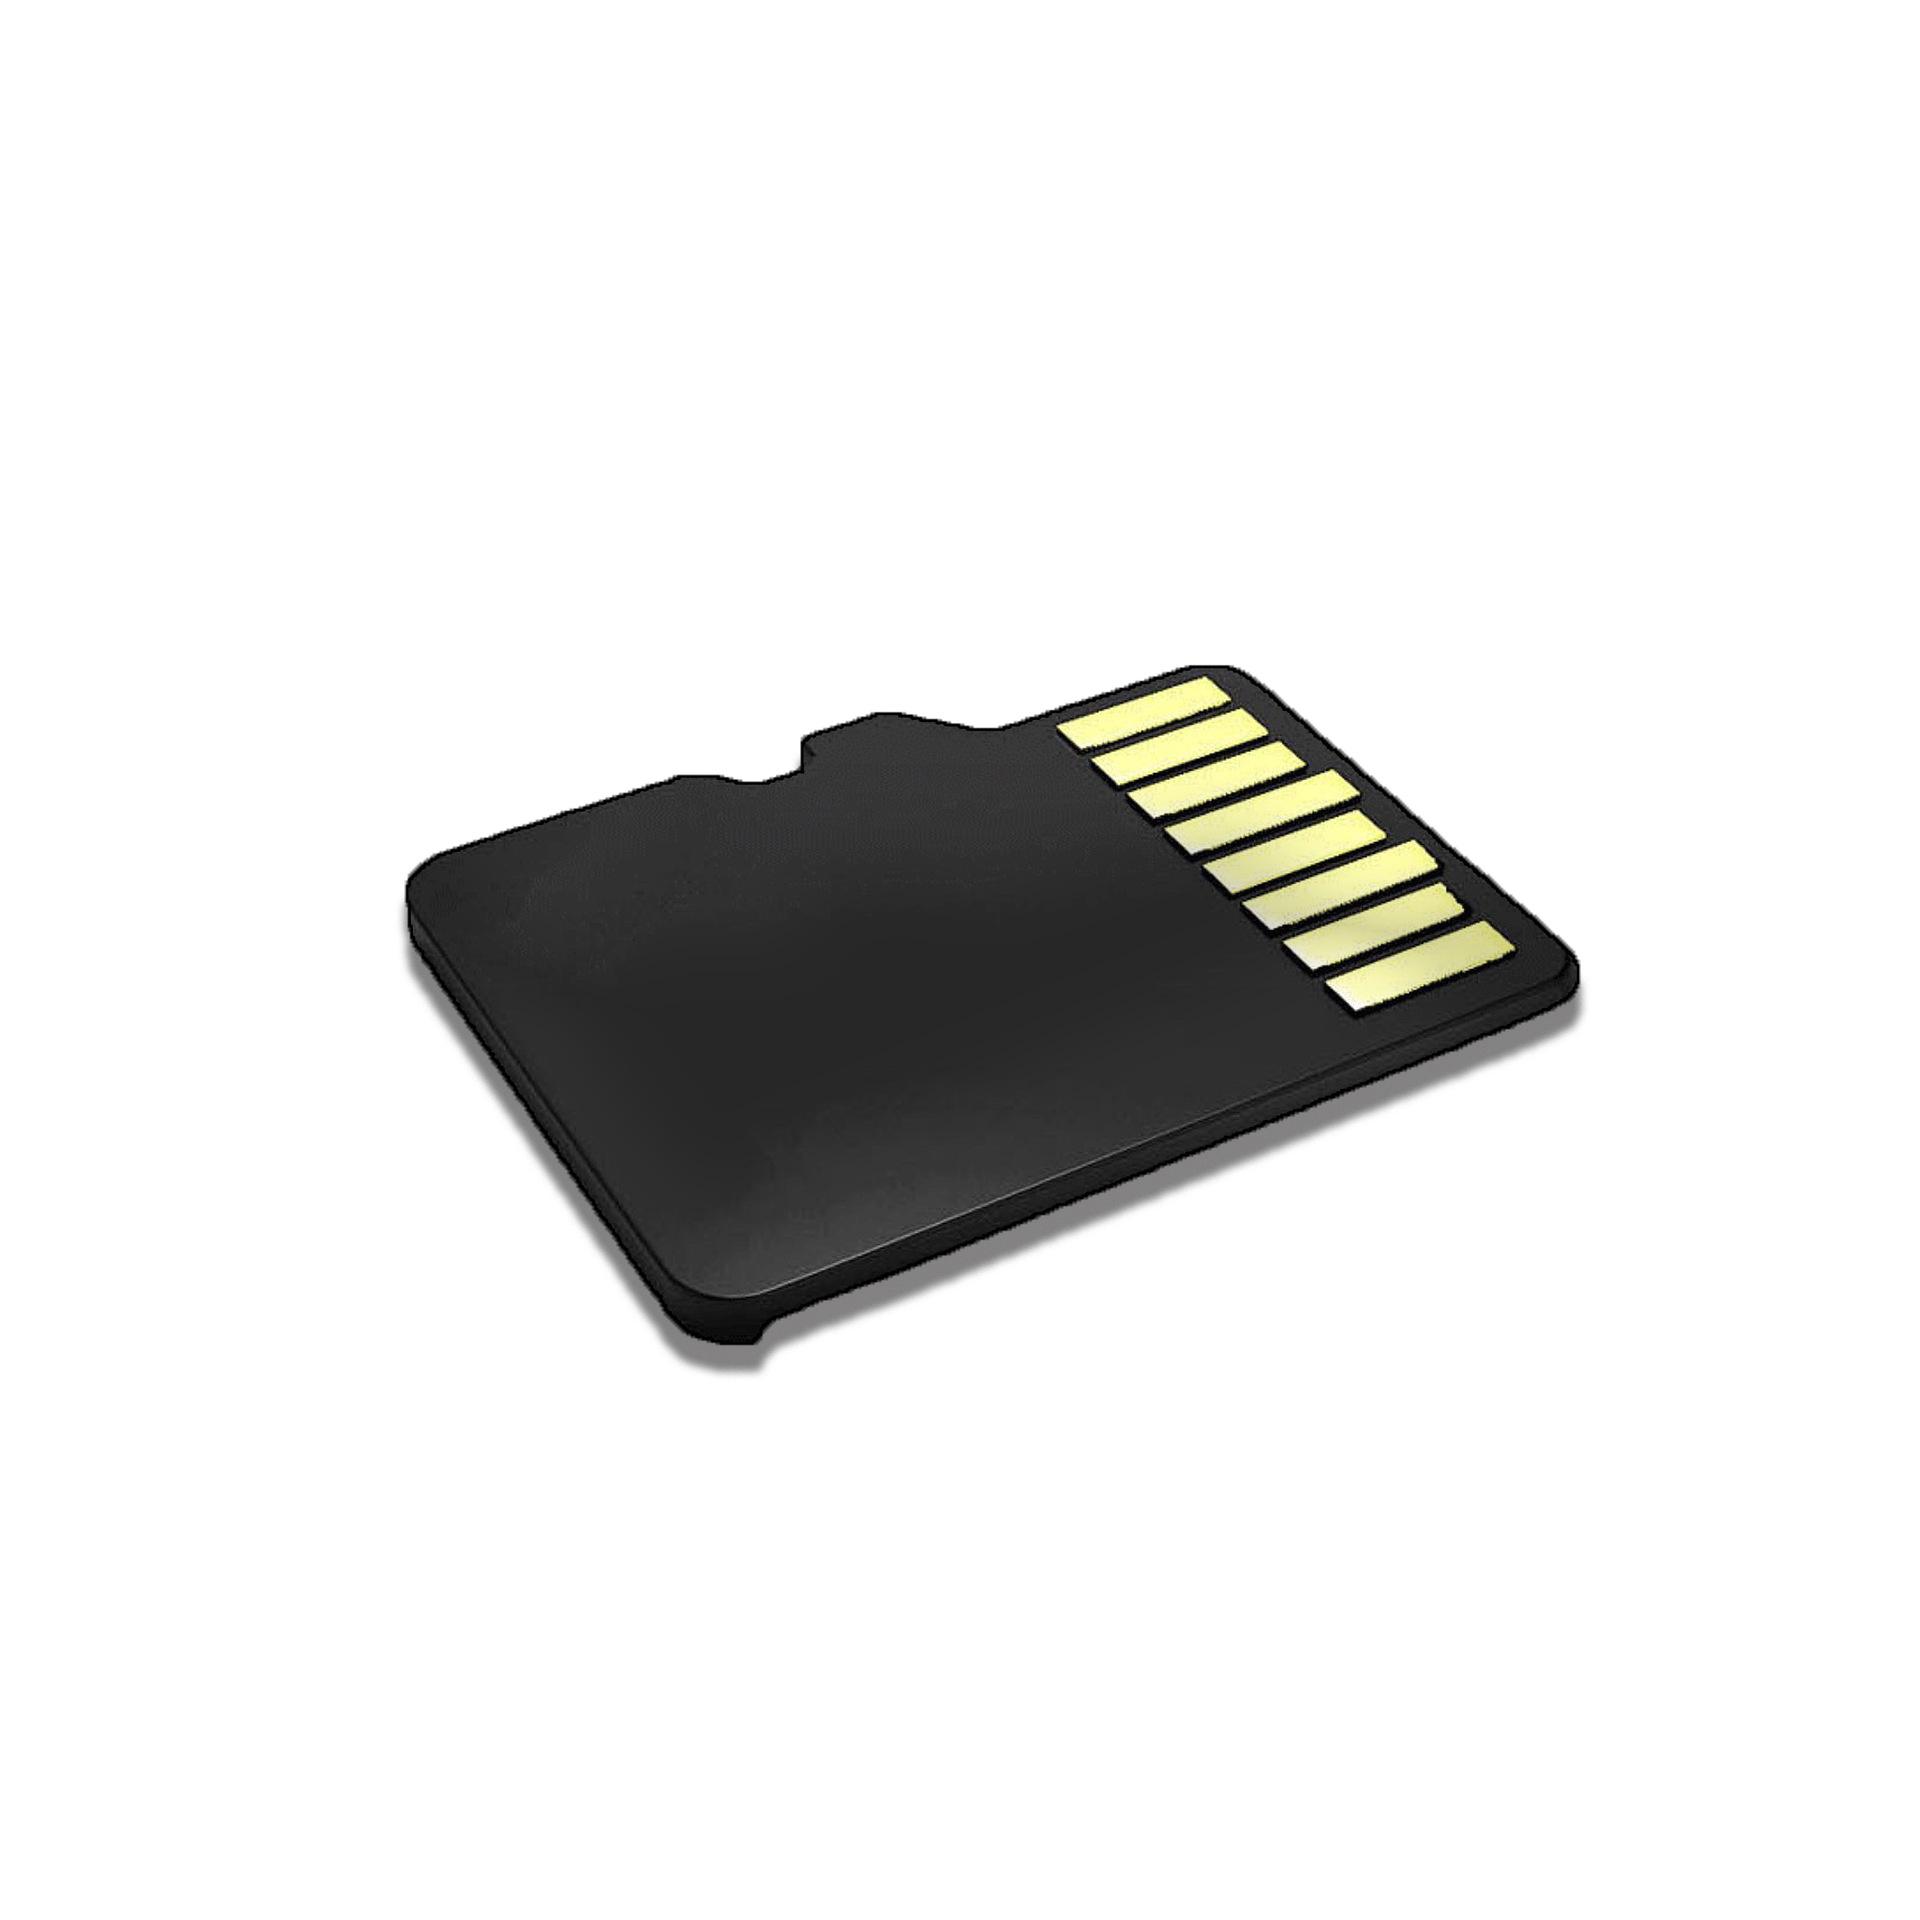 32GB BAR (METAL) USB 3.0 Flash Drive (MUF-32BA/AM)